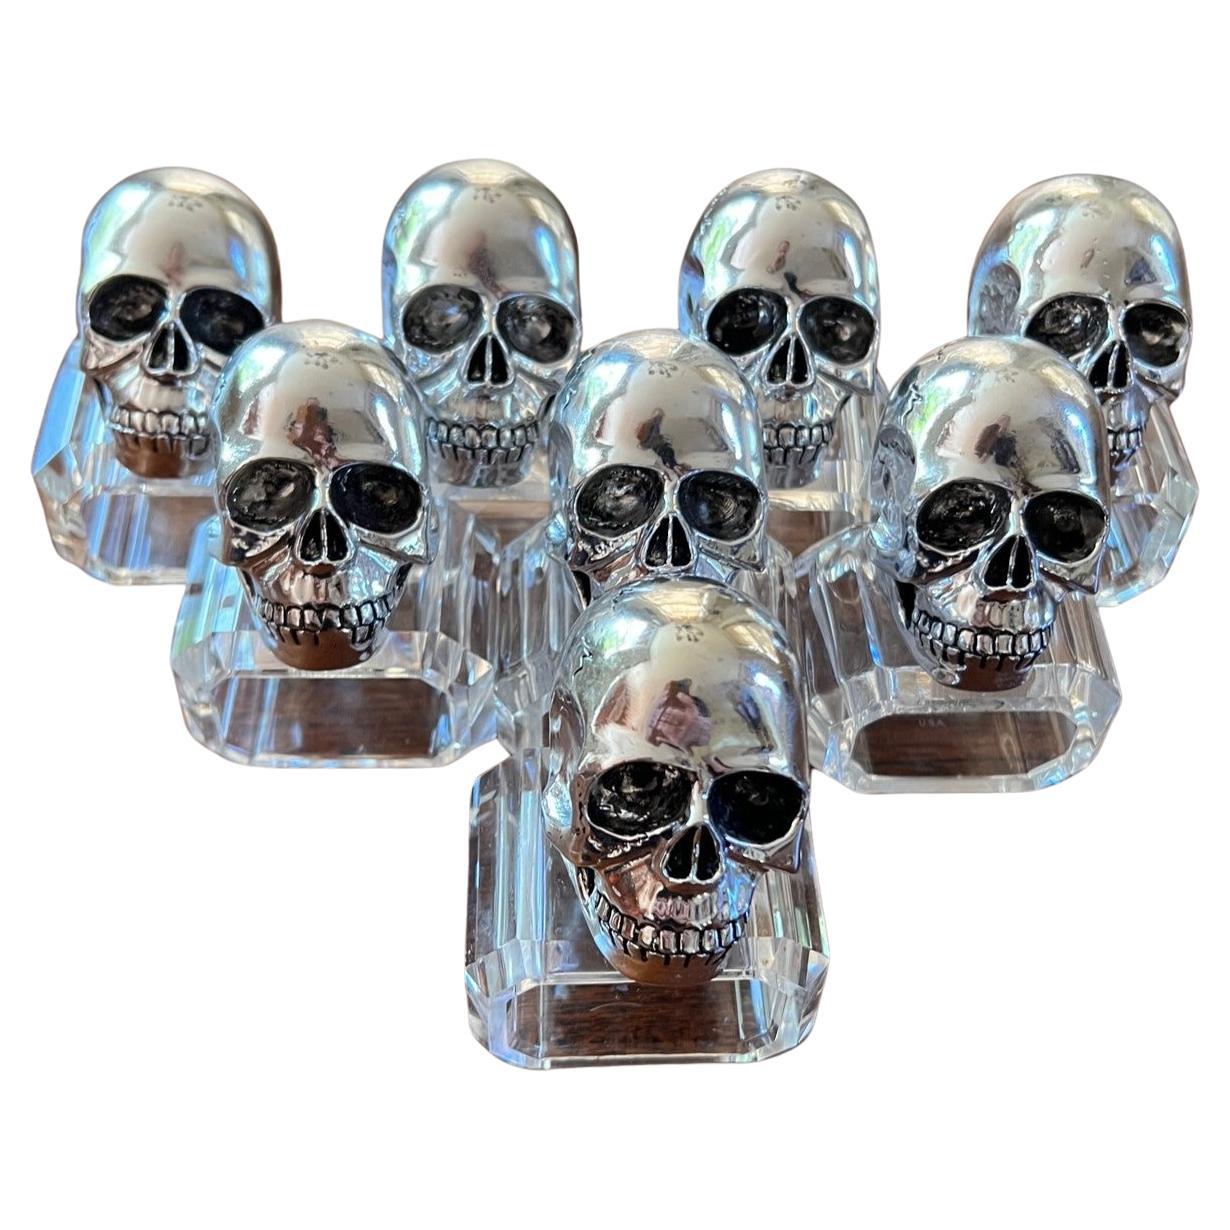 SkullJewelry.com- Skull Rings & Jewelry! Located in Utah. Same-Day s/h